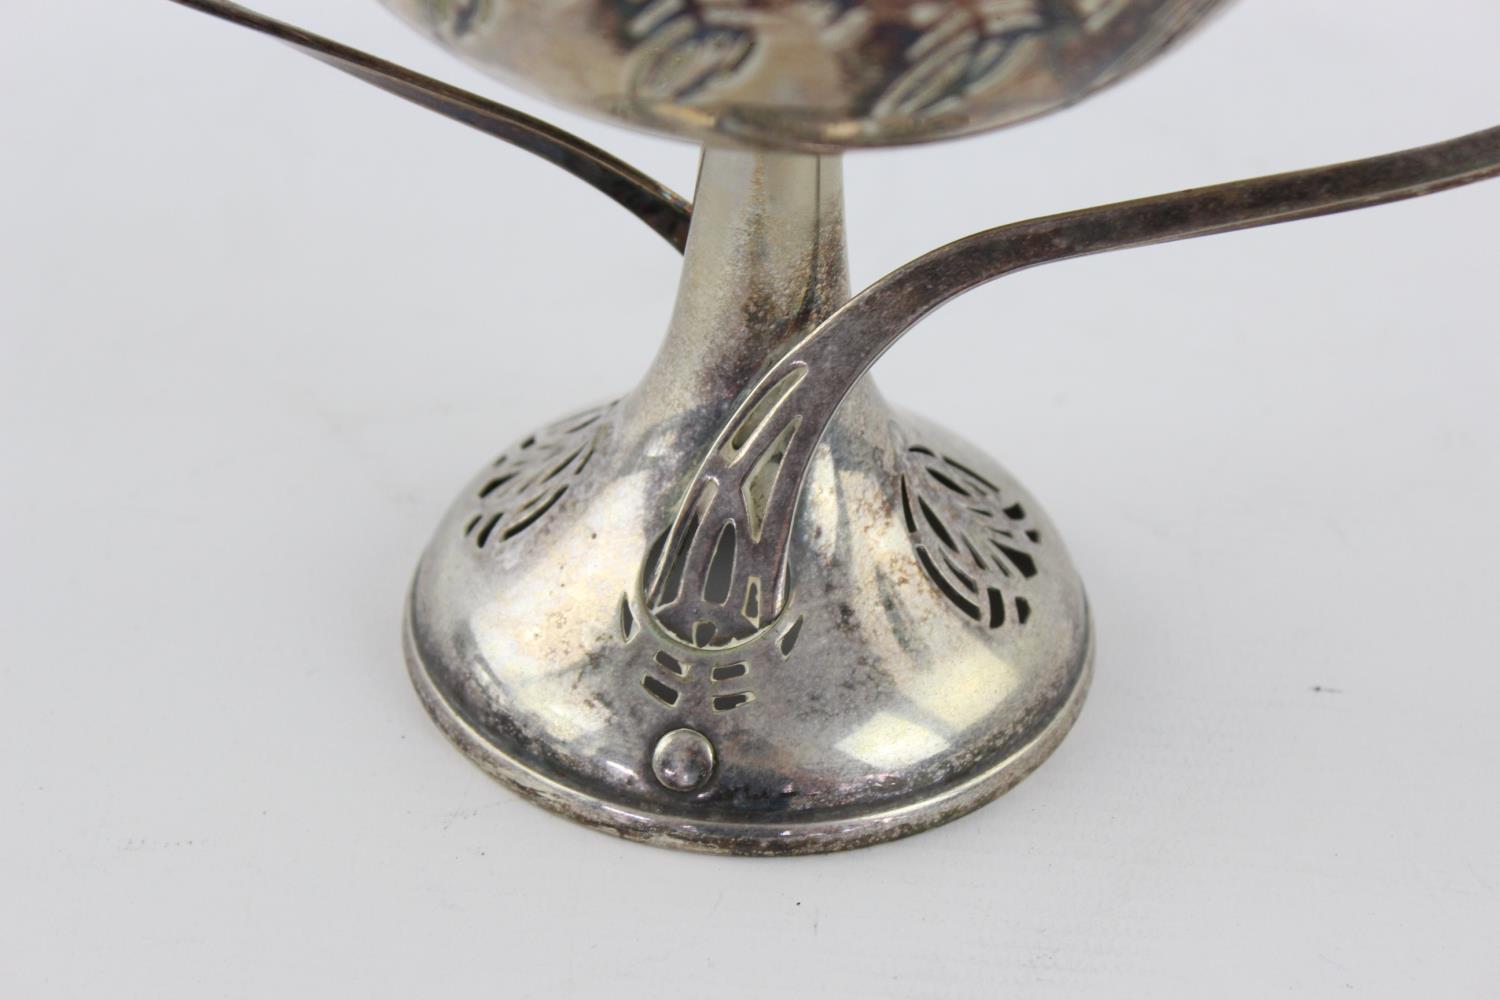 Antique WMF Jugendstil Pierced Silver Plated Tazza w/ Whiplash Handles (290g) - Image 3 of 4